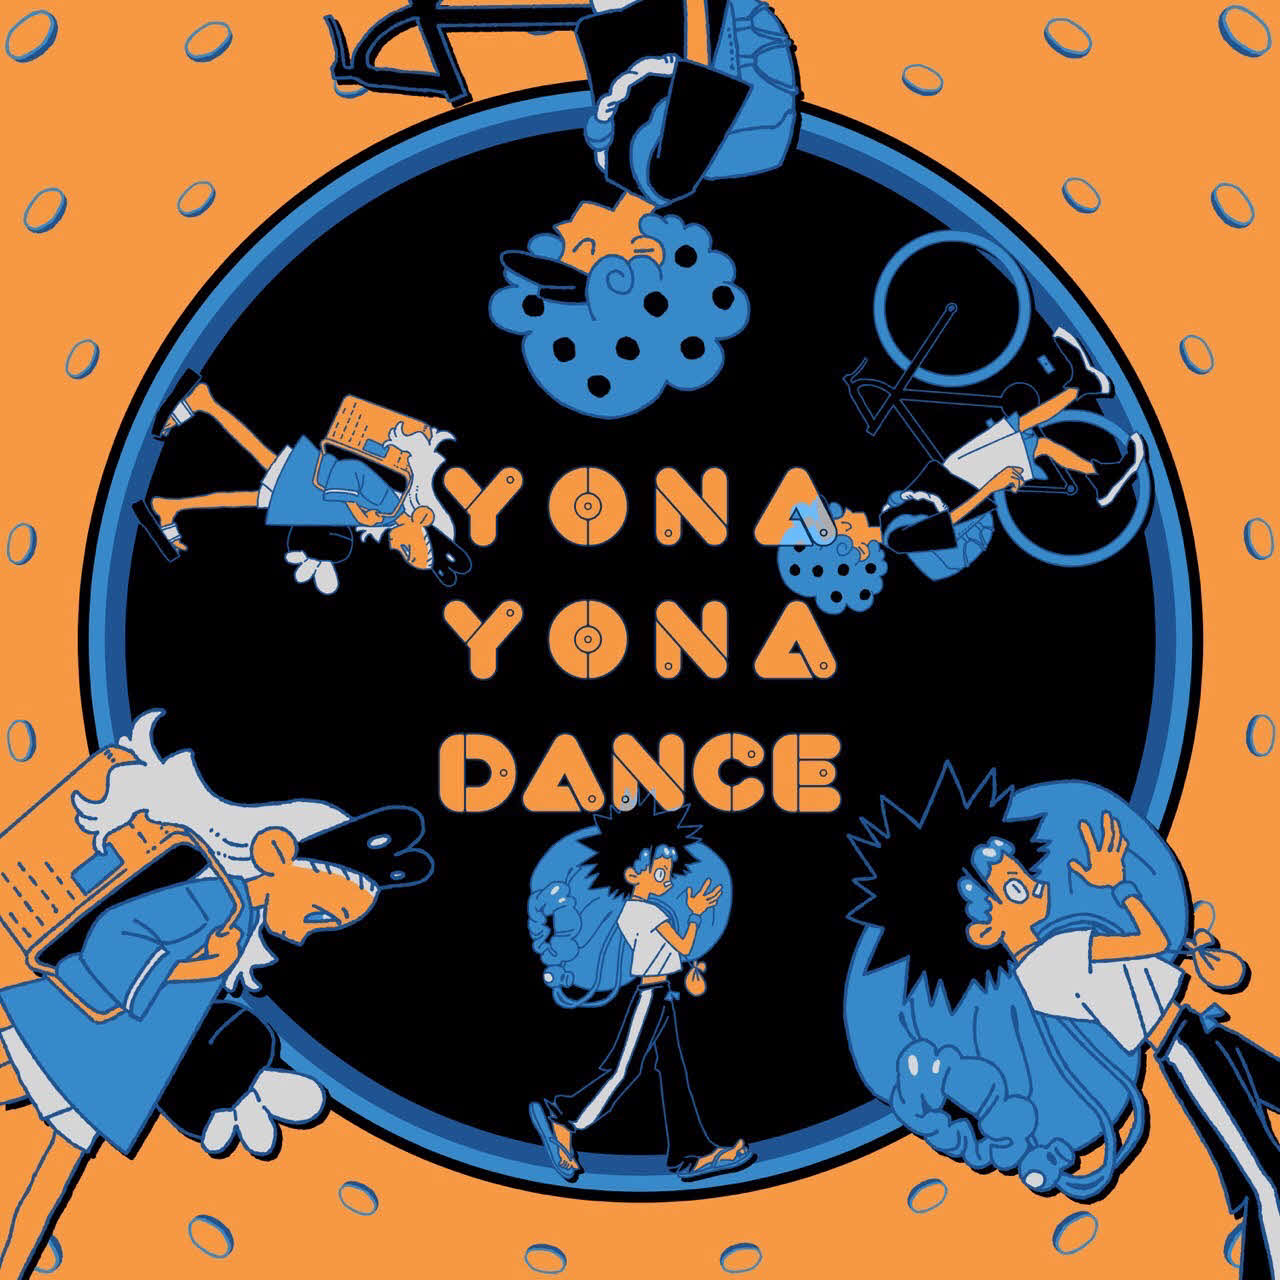 「YONA YONA DANCE」のジャケット写真